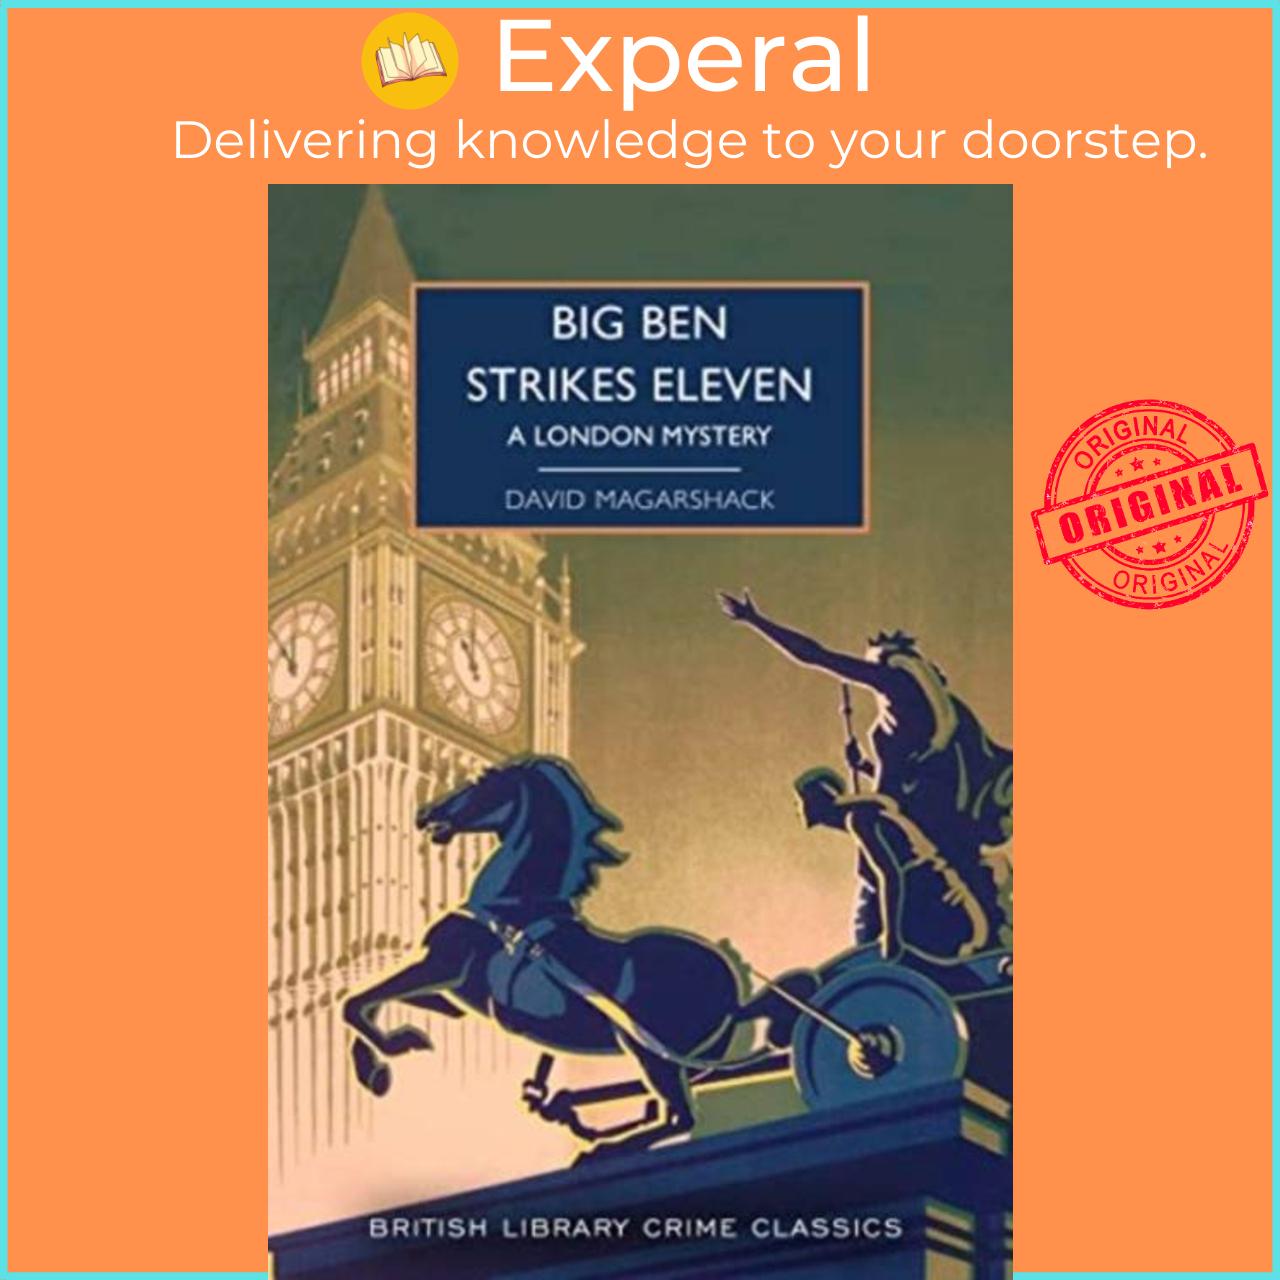 Sách - Big Ben Strikes Eleven by David Magarshack (UK edition, paperback)